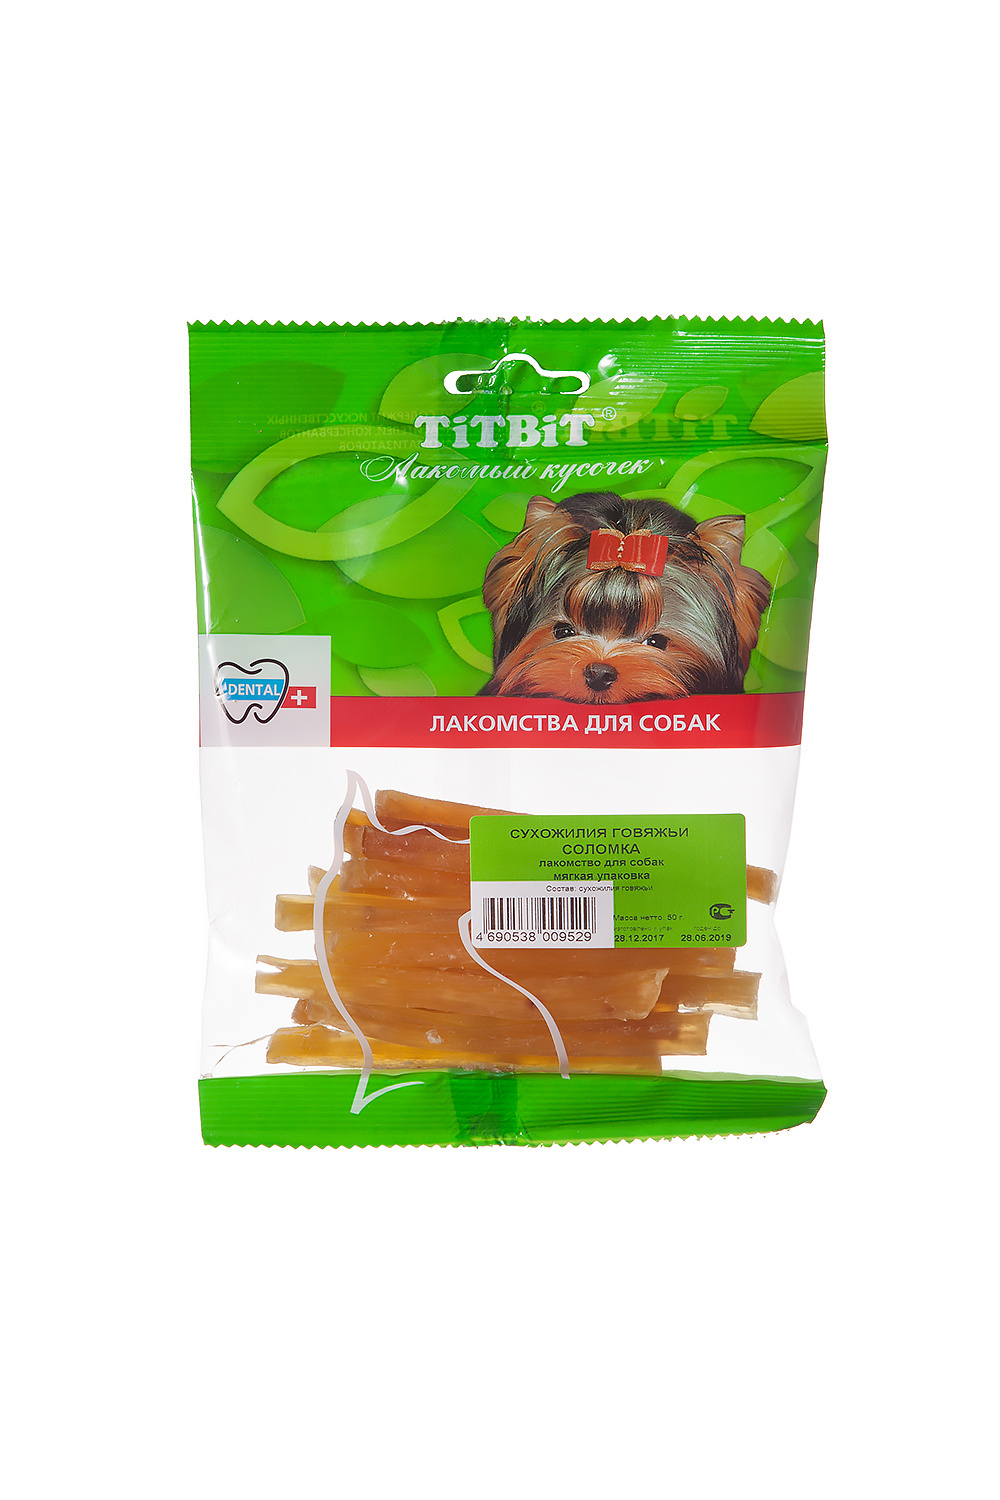 titbit титбит соломка мини мягкая упаковка шт TiTBiT TiTBiT сухожилия говяжьи (соломка) - мягкая упаковка (50 г)